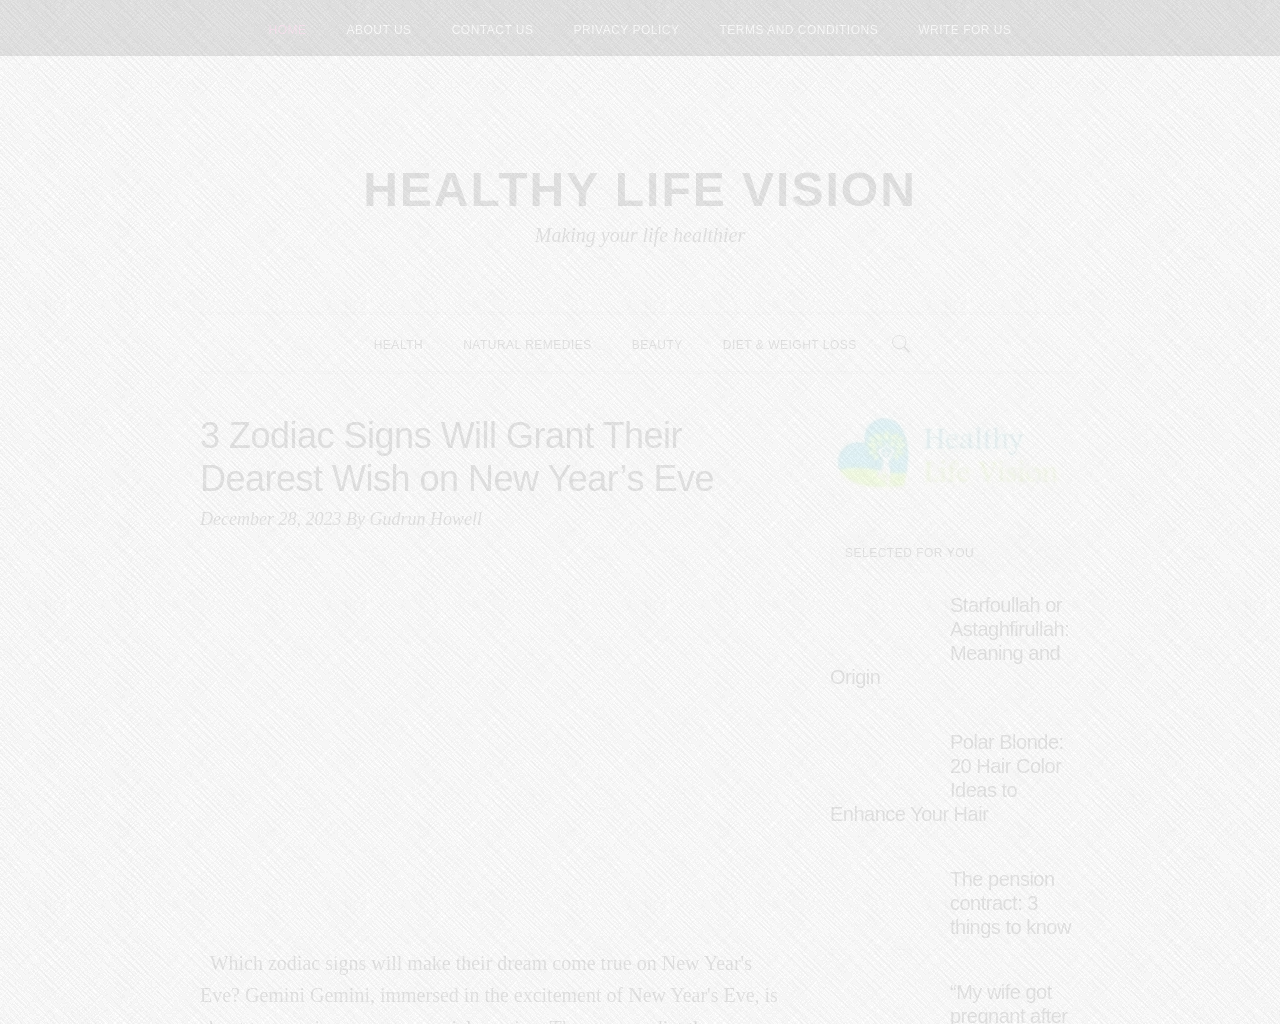 healthylifevision.com